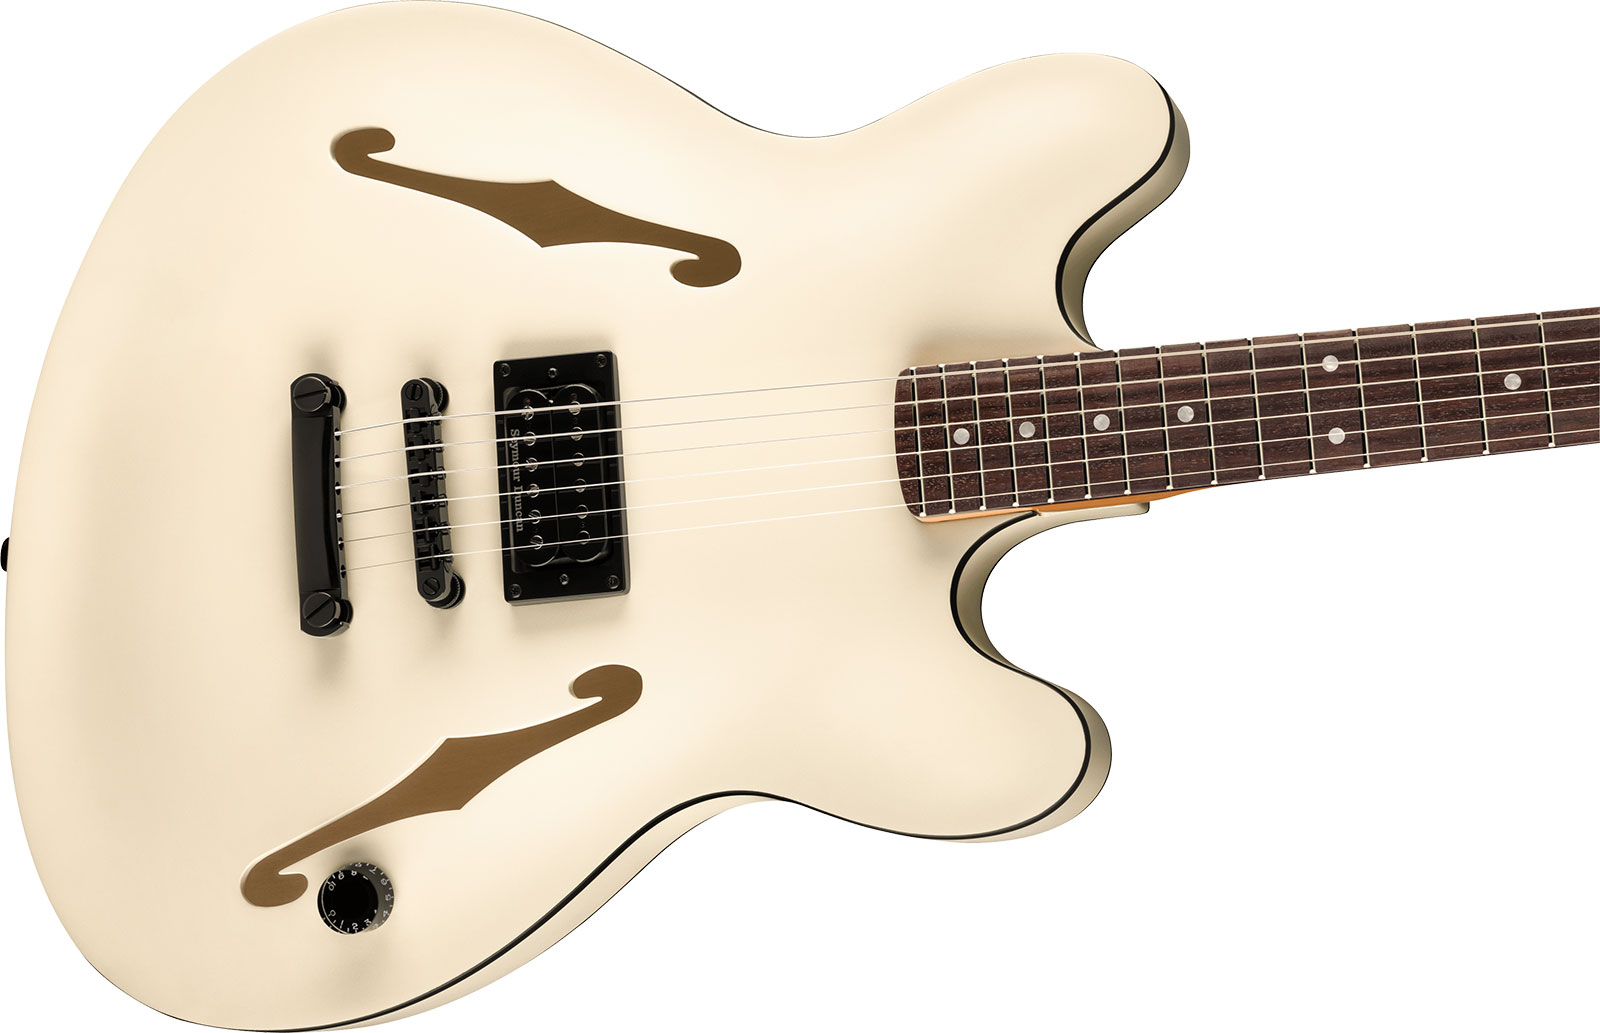 Fender Tom Delonge Starcaster Signature 1h Seymour Duncan Ht Rw - Satin Olympic White - Semi-hollow electric guitar - Variation 2